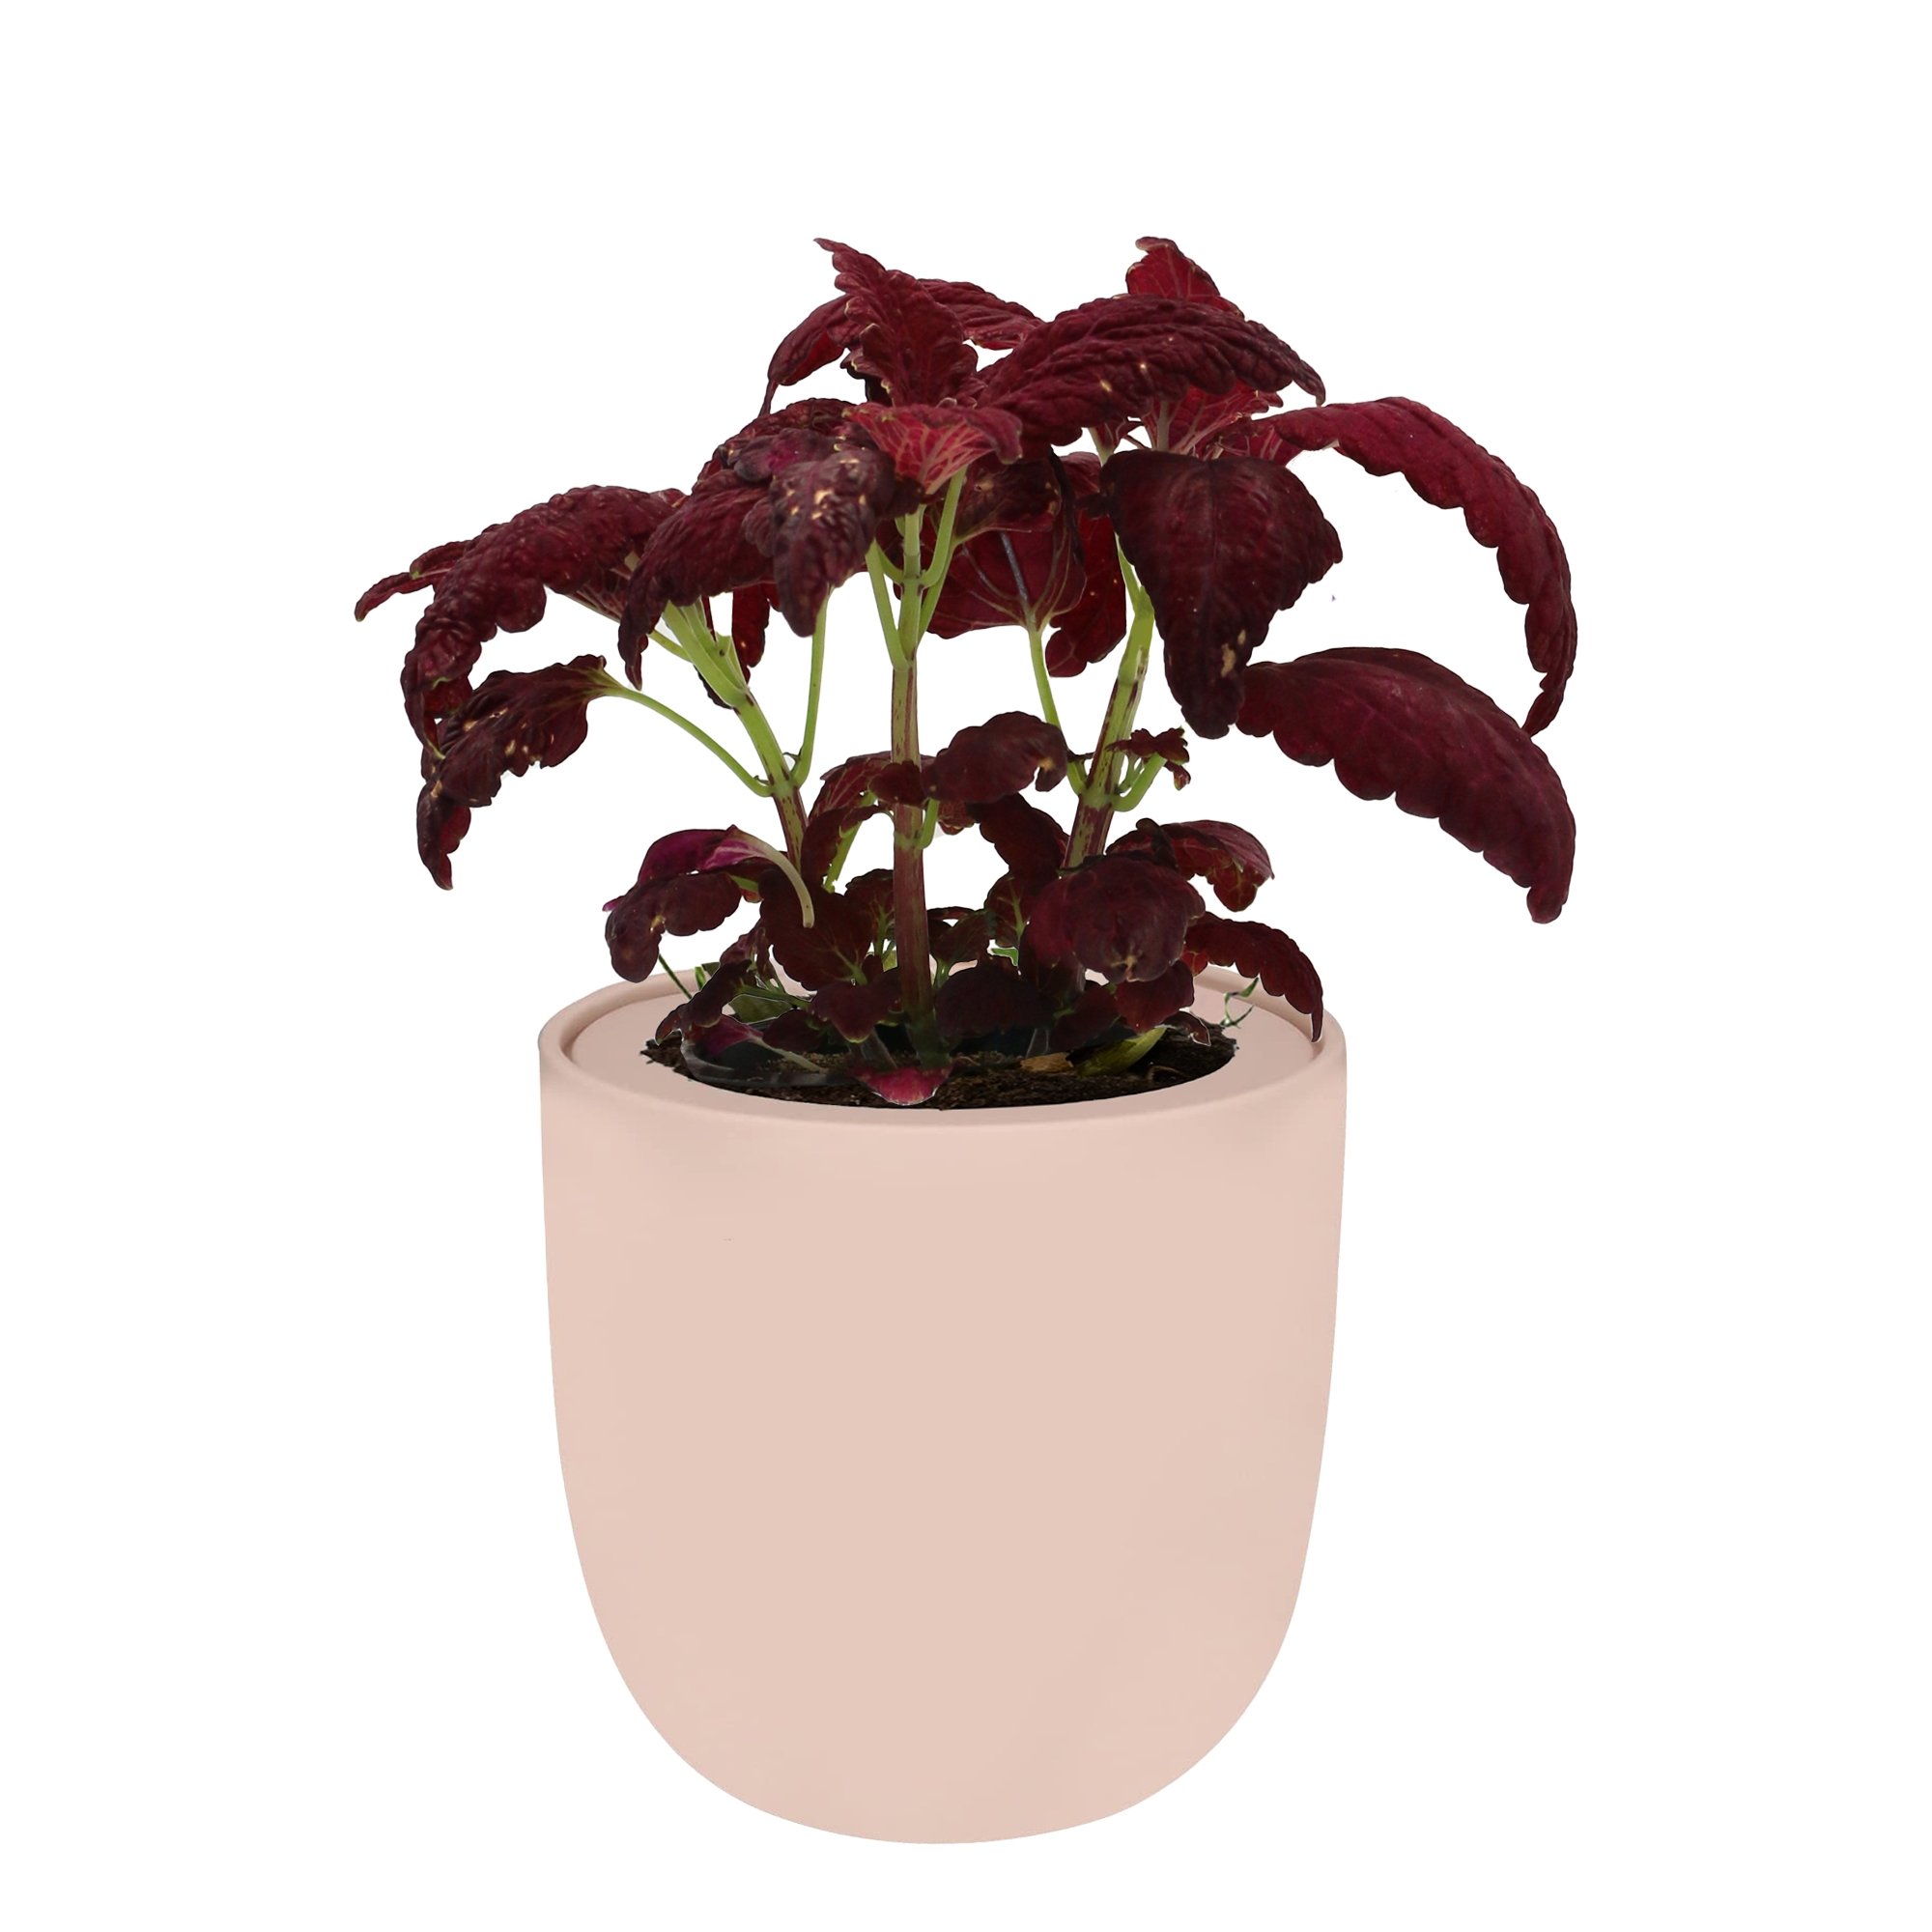 Coleus - Black Dragon Pink Ceramic Pot Hydroponic Growing Kit with Seeds